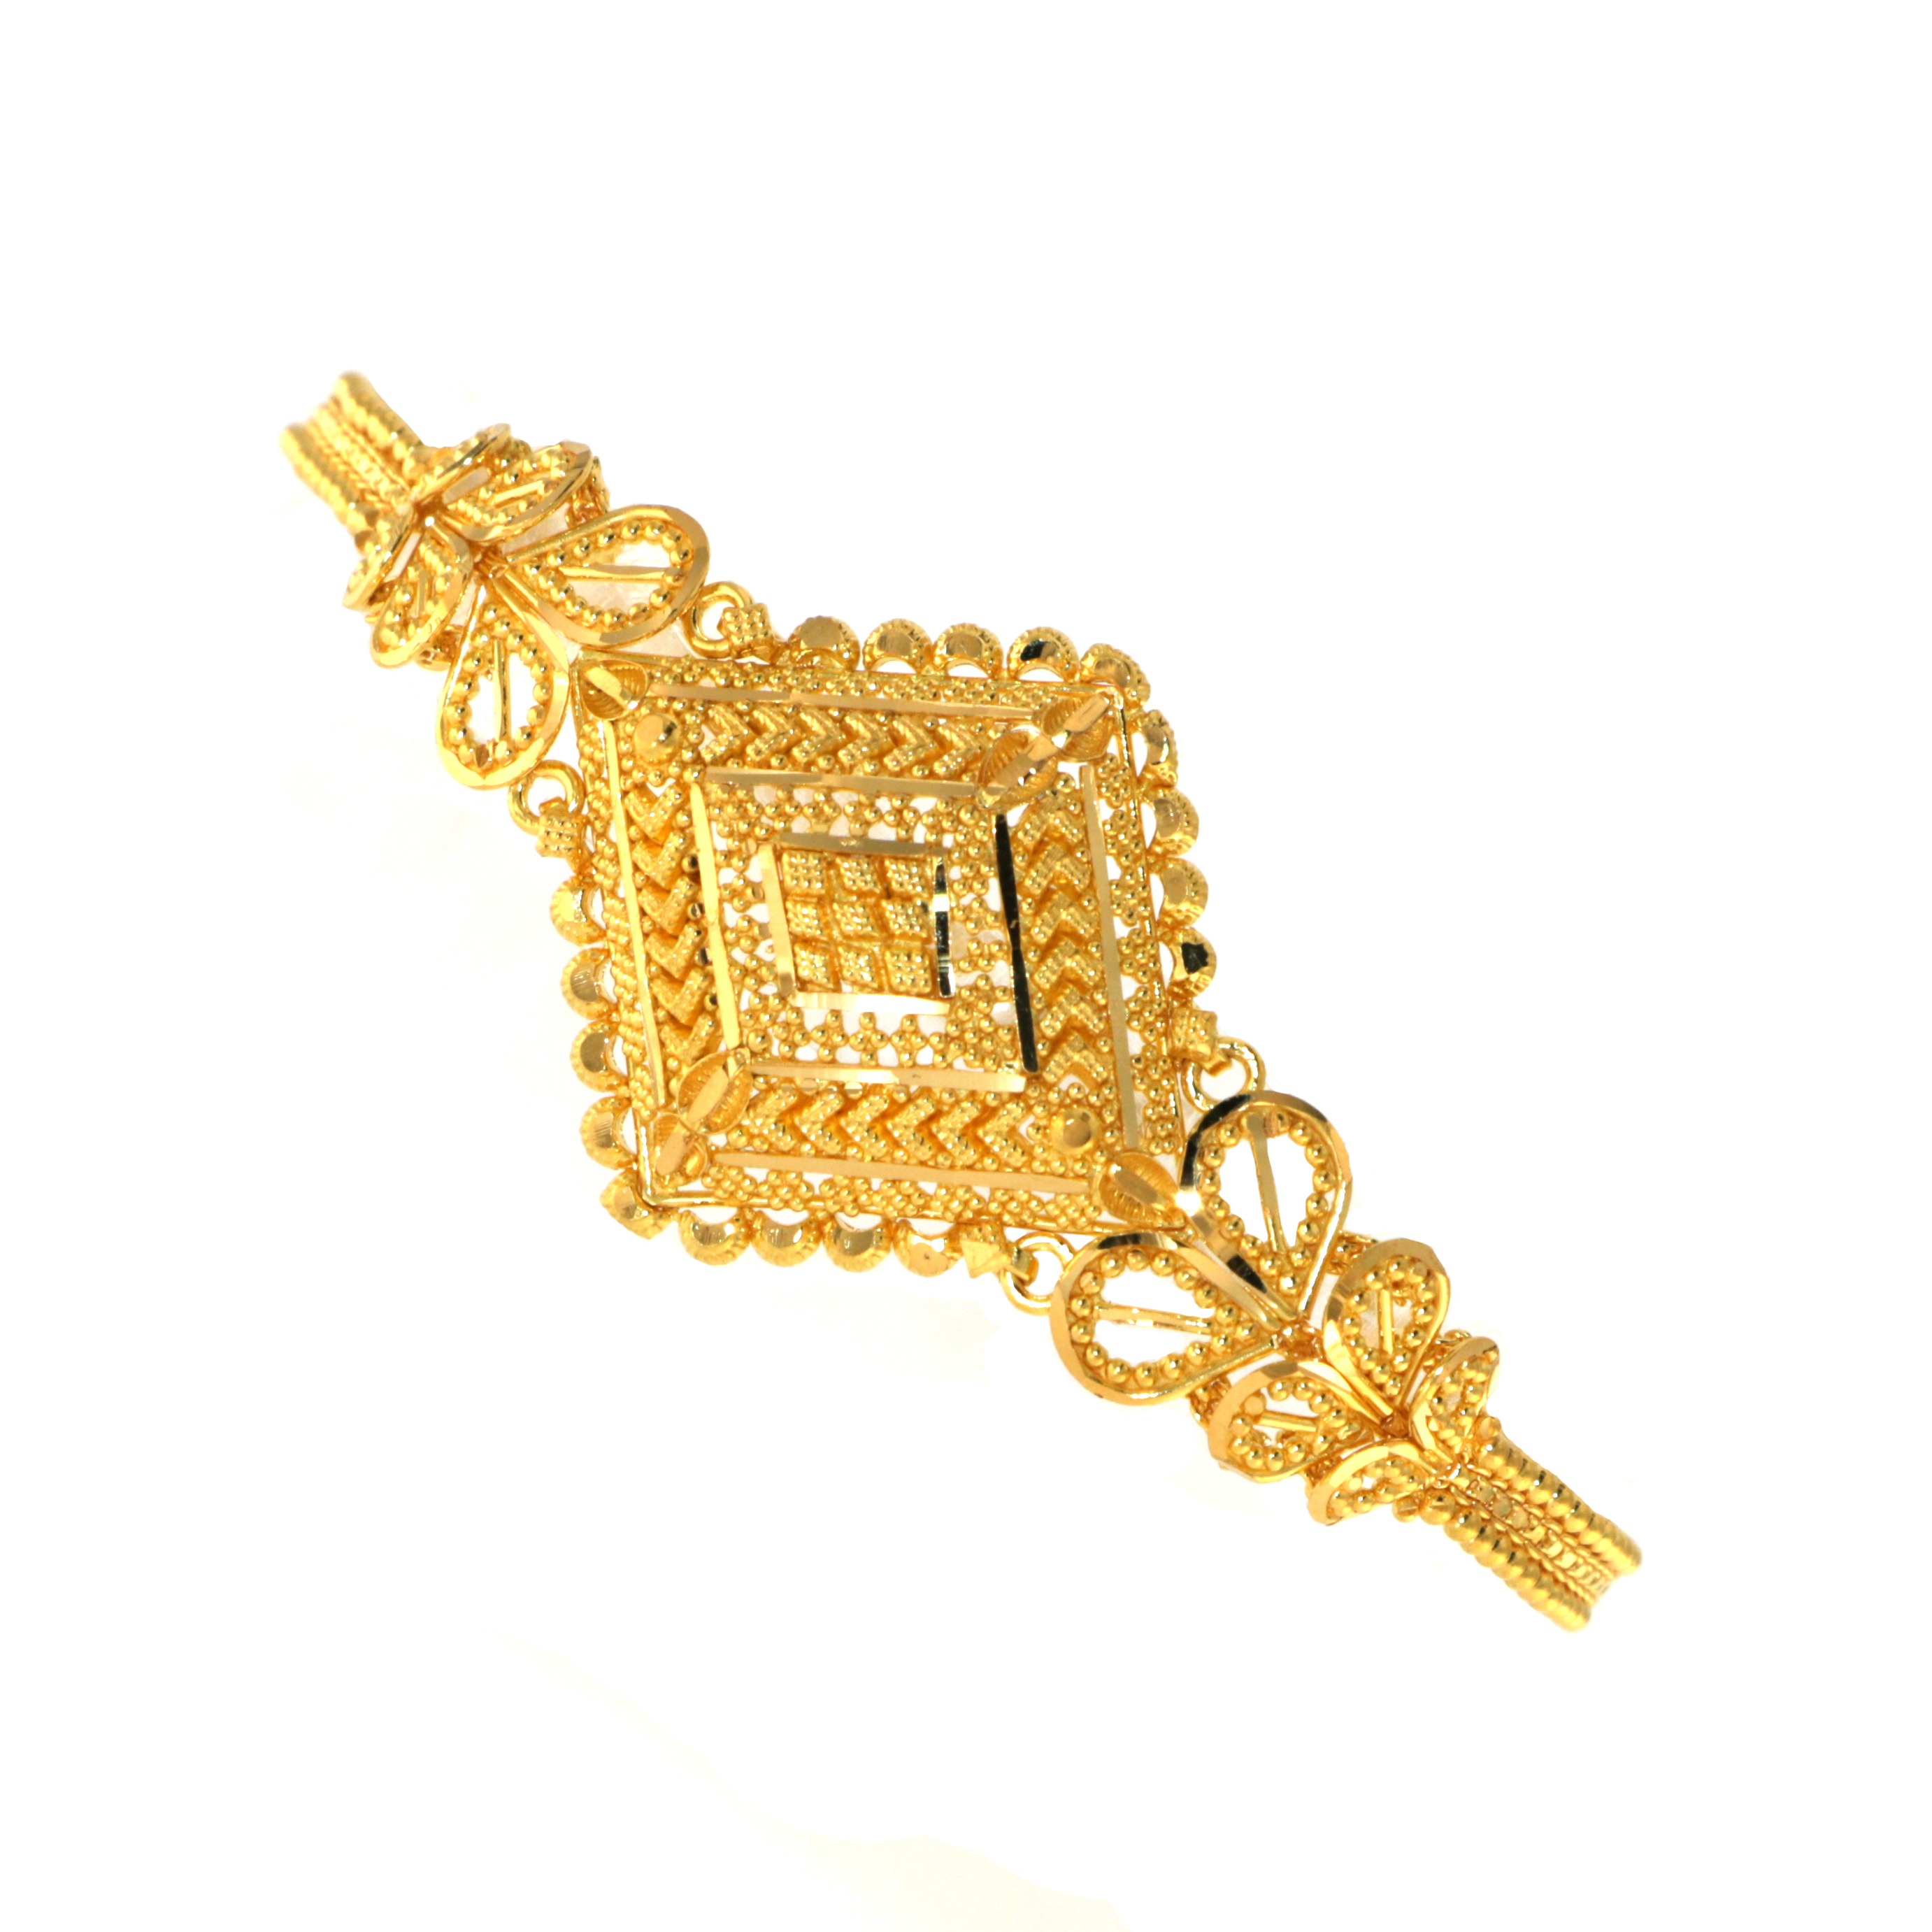 22carat Gold Filigree Bracelet